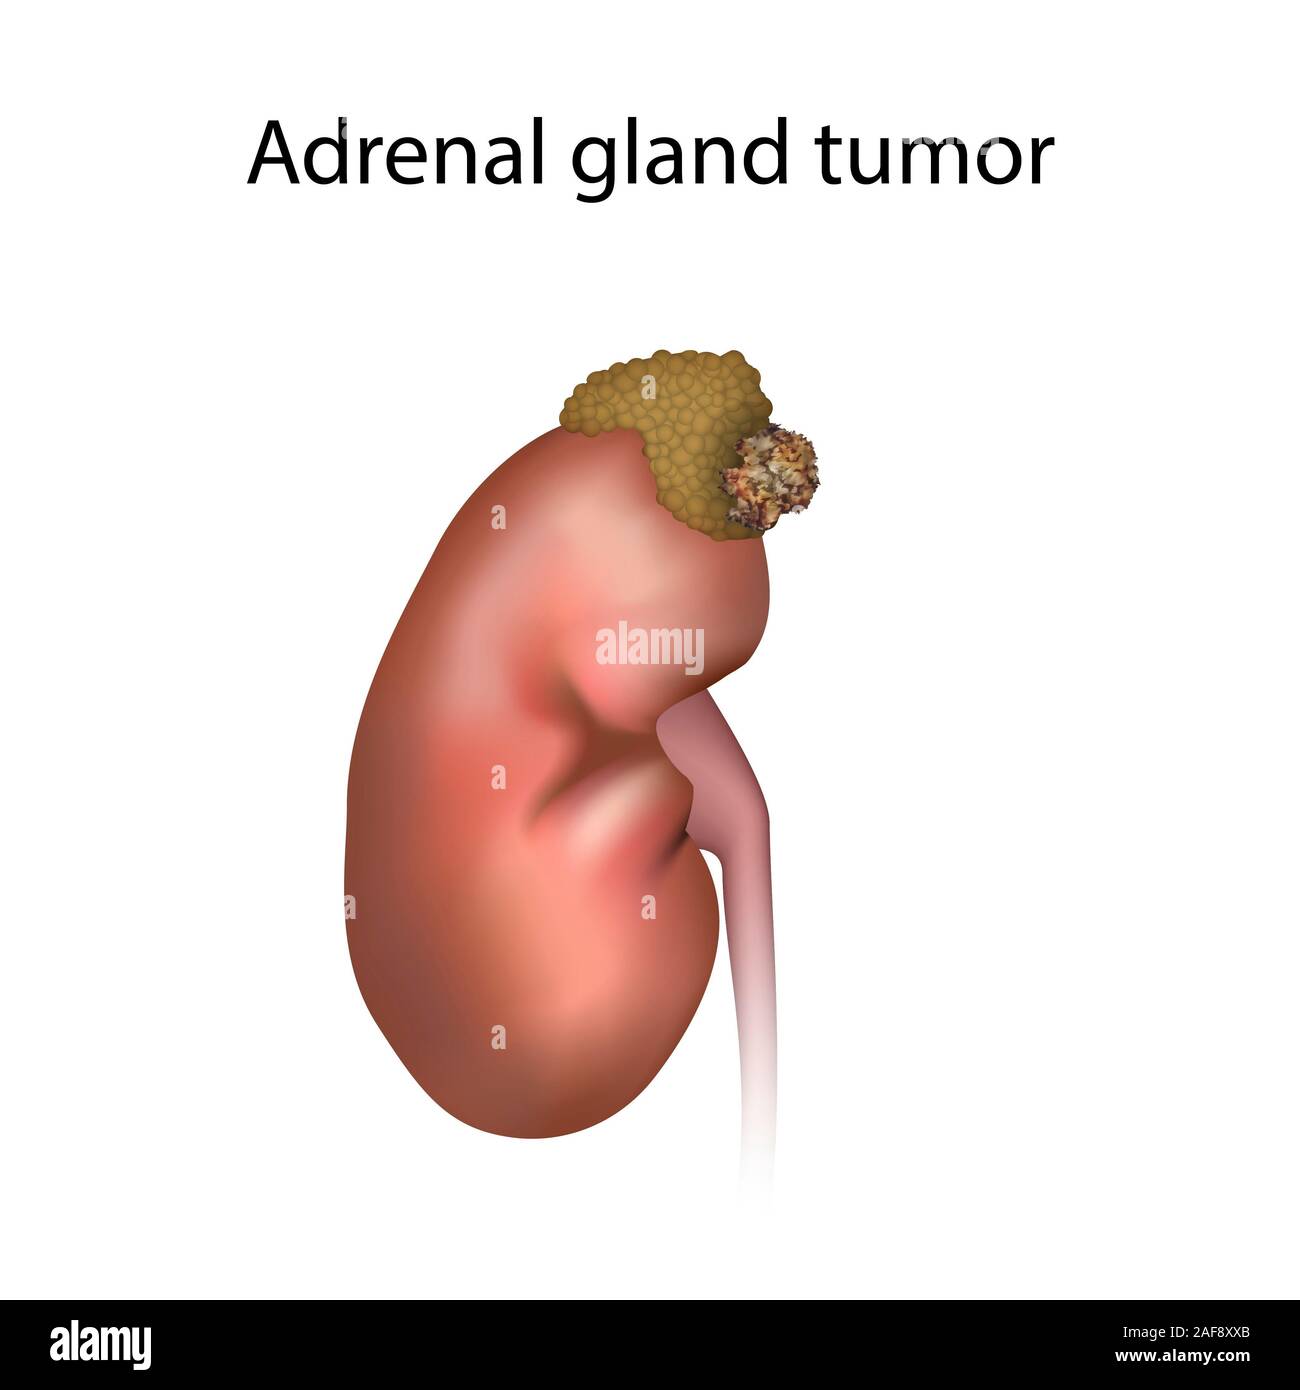 Adrenal gland tumour, illustration Stock Photo